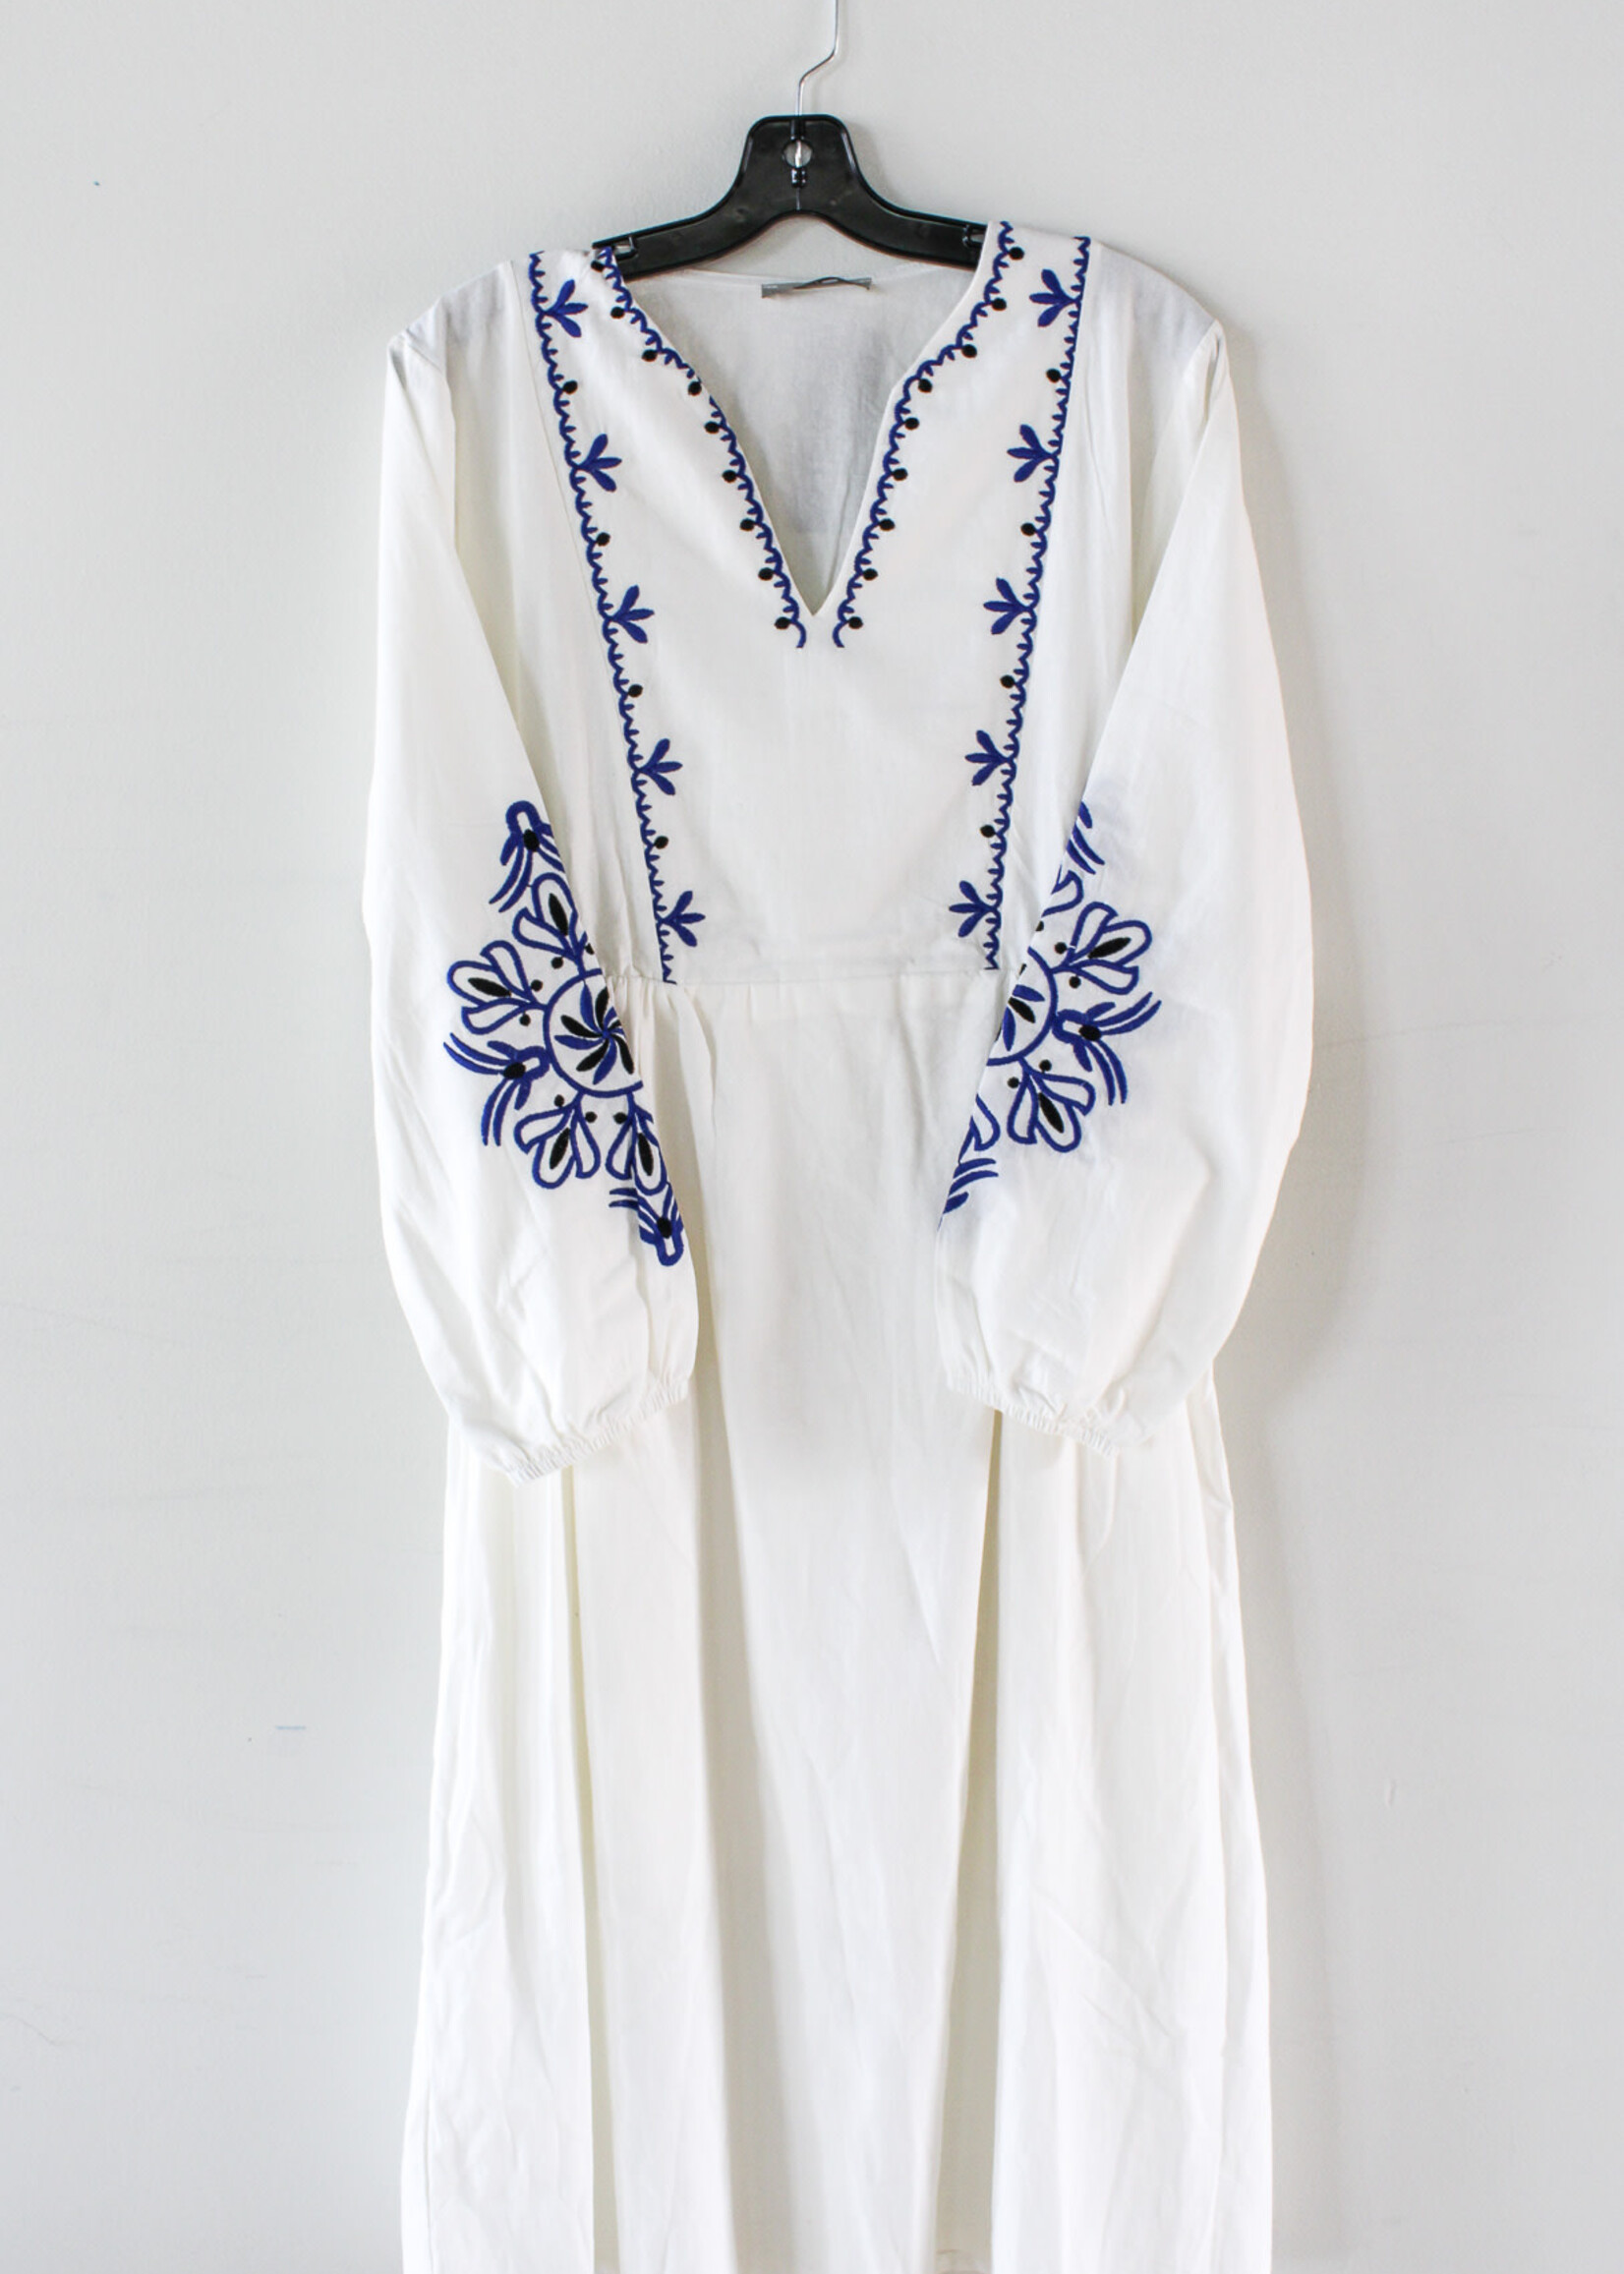 Dressa VYSHYVANKA - Cream & blue long dress, large (48)